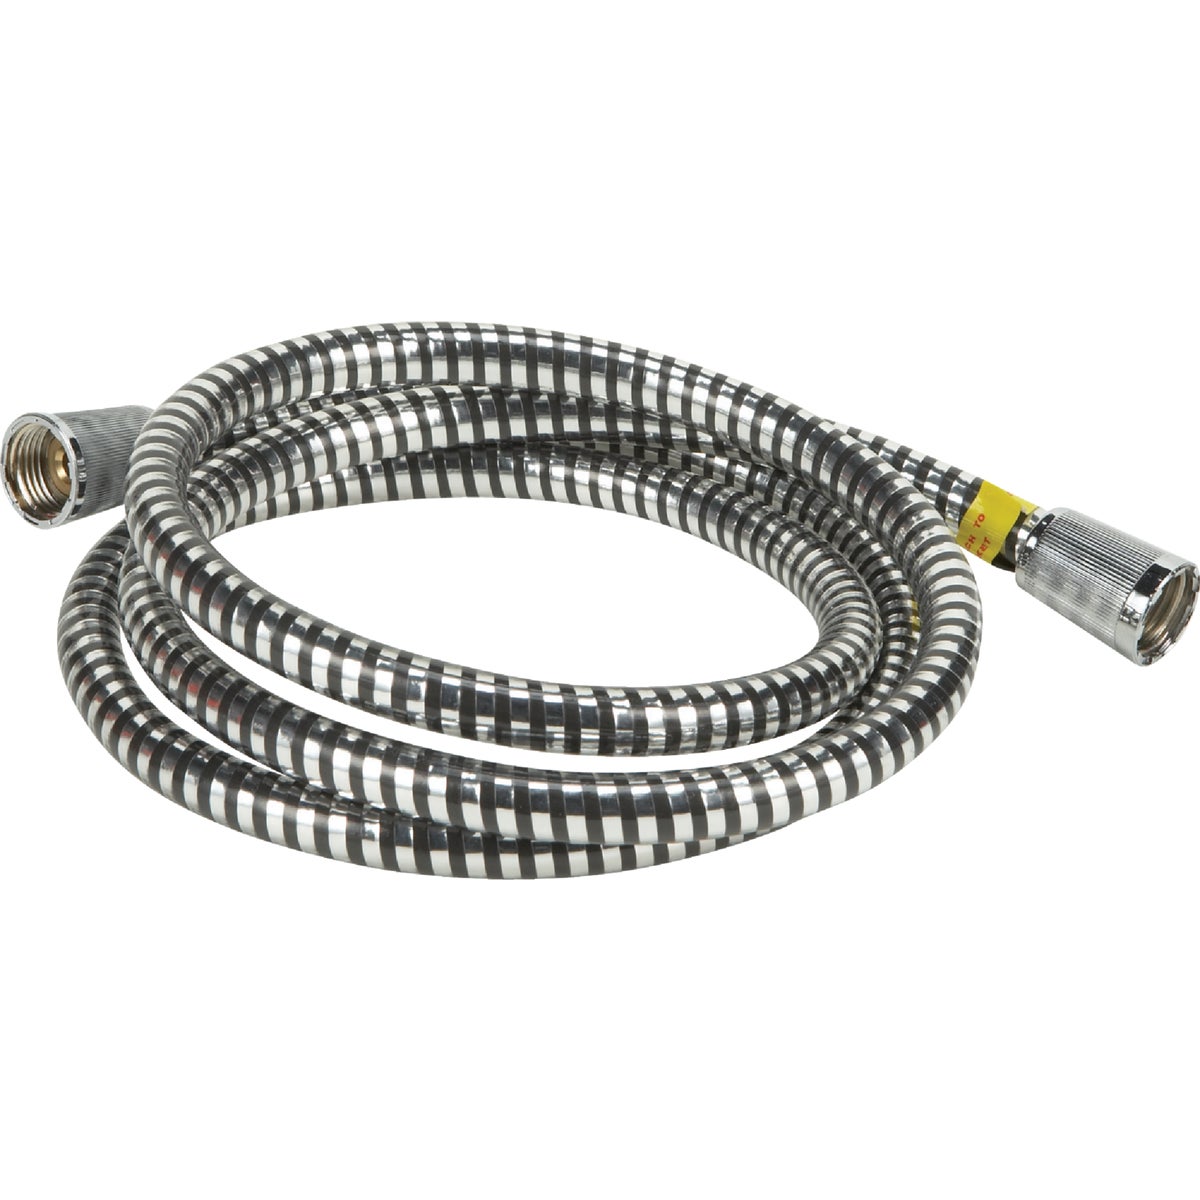 Item 428027, Mylar 84" anti-twist shower hose with vacuum breaker.